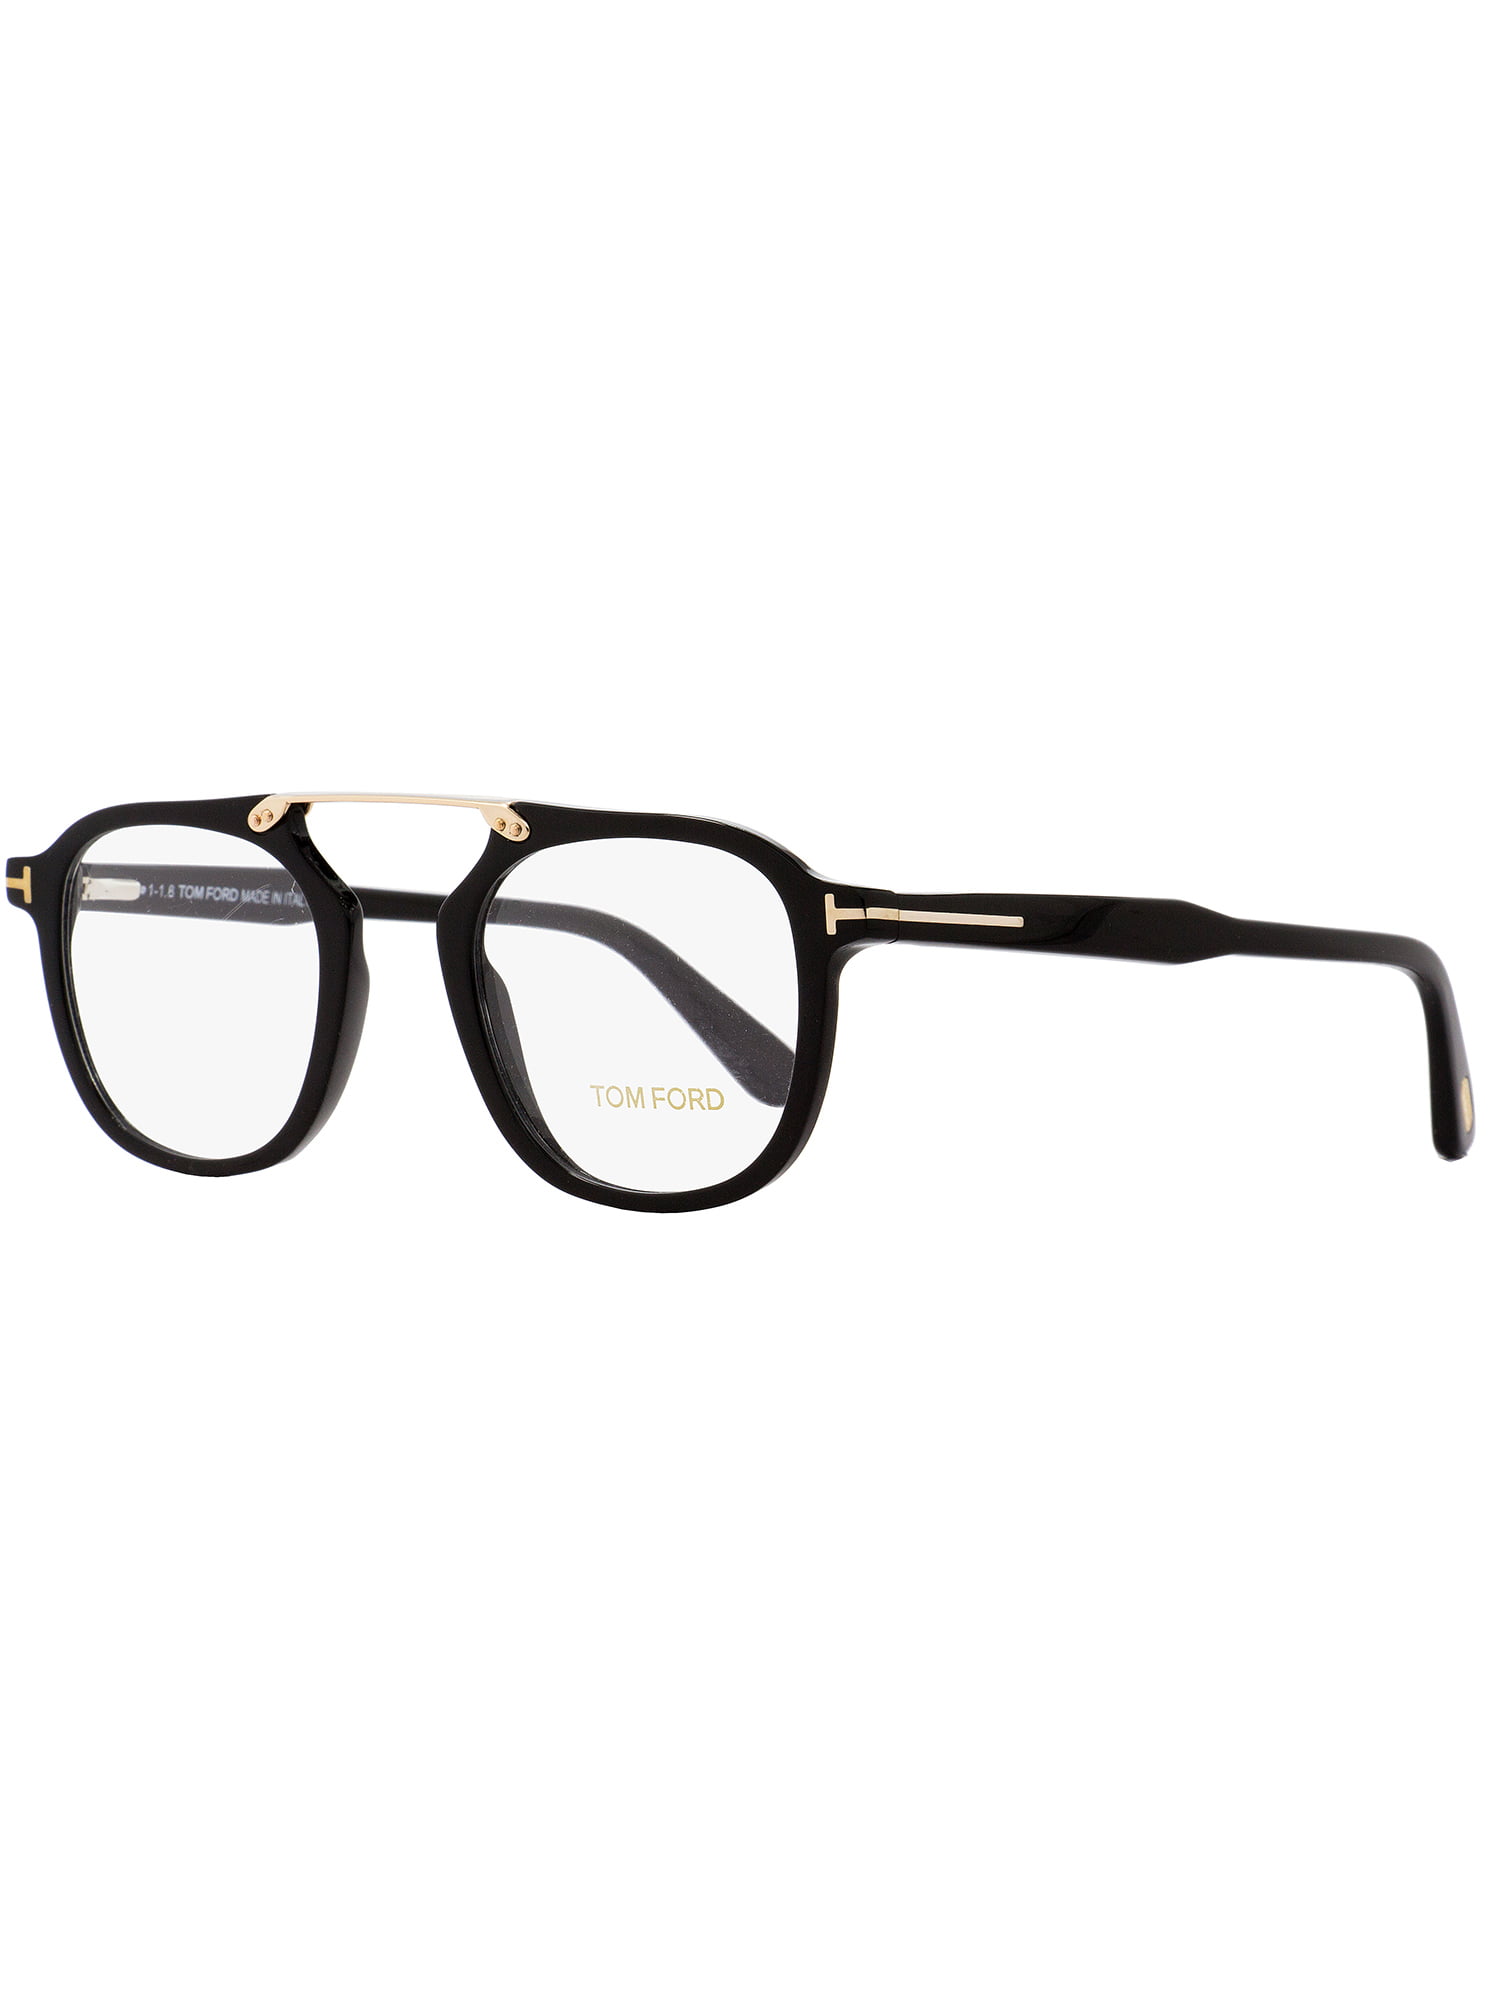 Authentic Tom Ford FT5495 001 Shiny Black Eyeglasses 